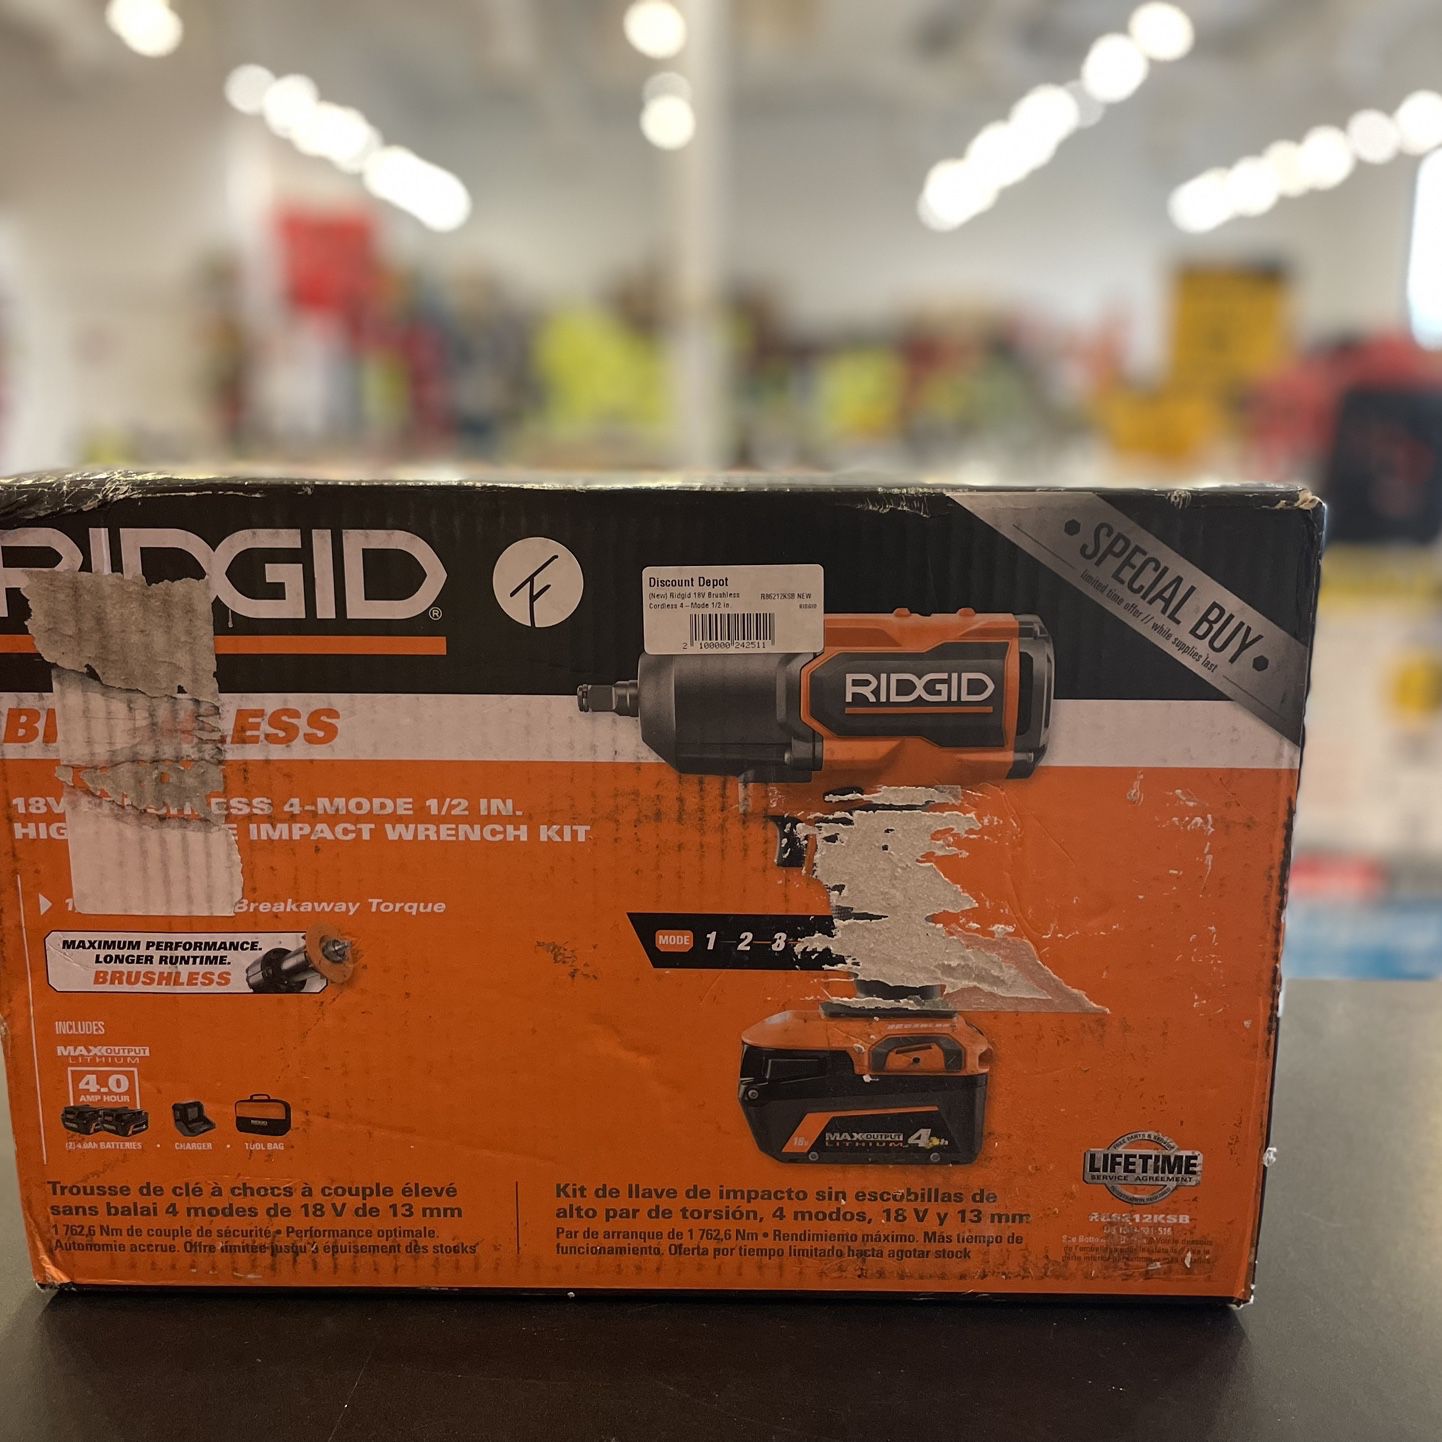 RIDGID 18V Brushless Cordless 4-Mode 1/2 in. High-Torque Impact Wrench Kit w/ (2) 4.0 Ah Batteries, Charger R86212ksb